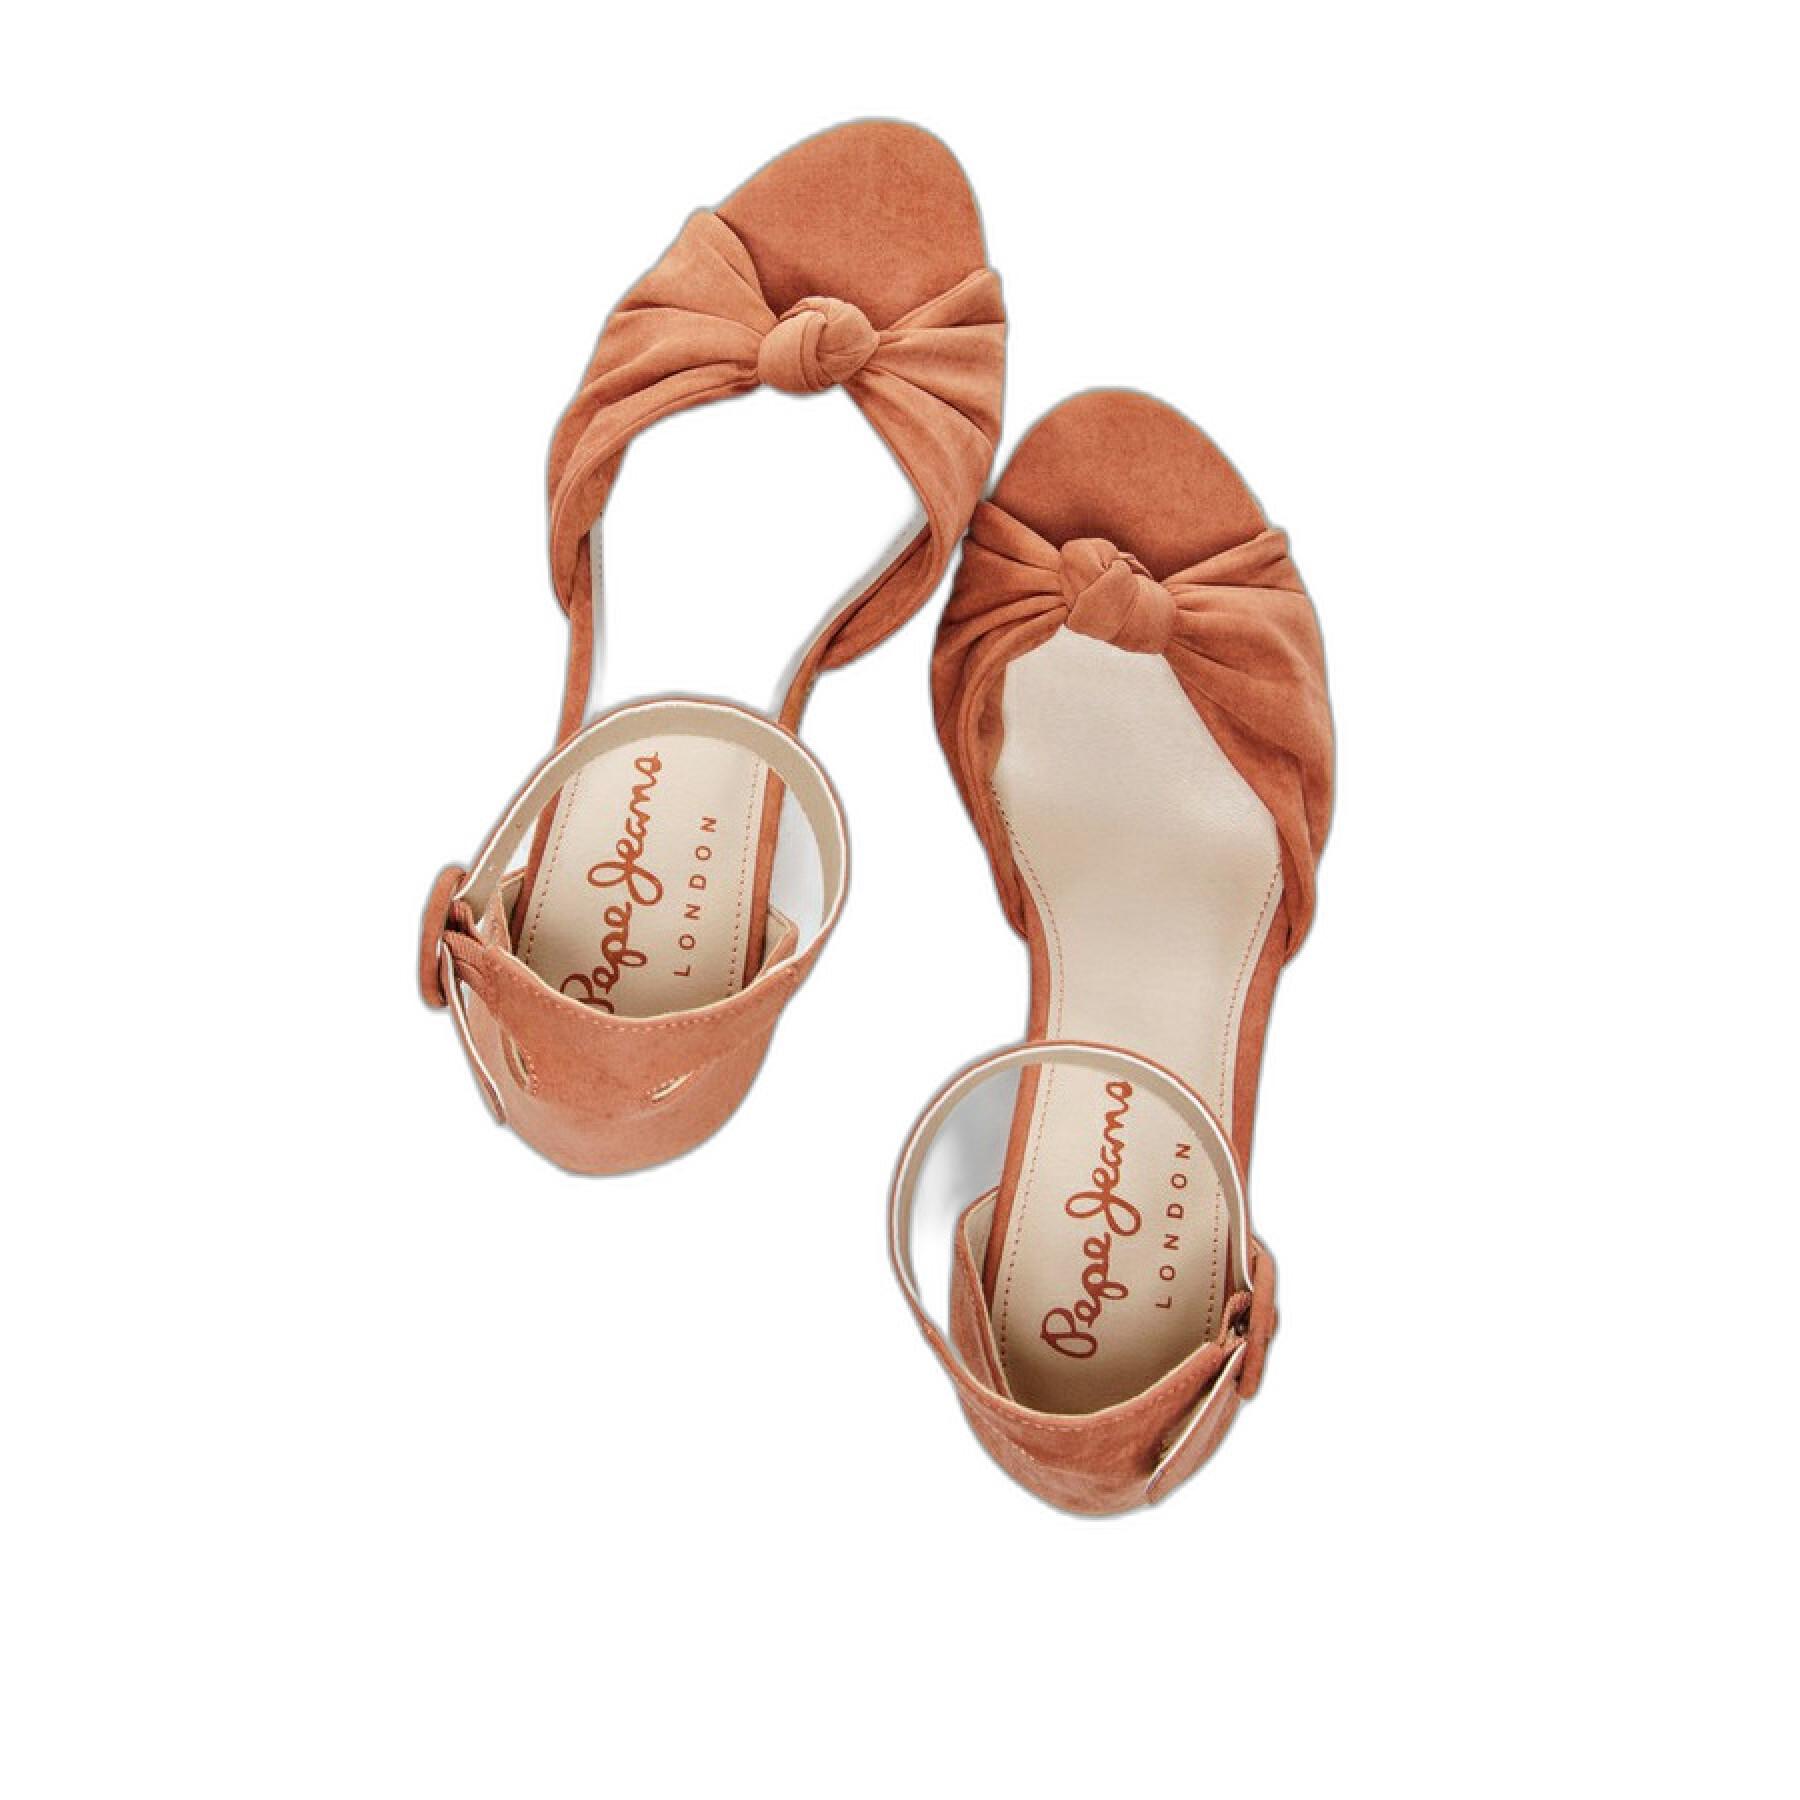 Women's sandals Pepe Jeans Maida Peach